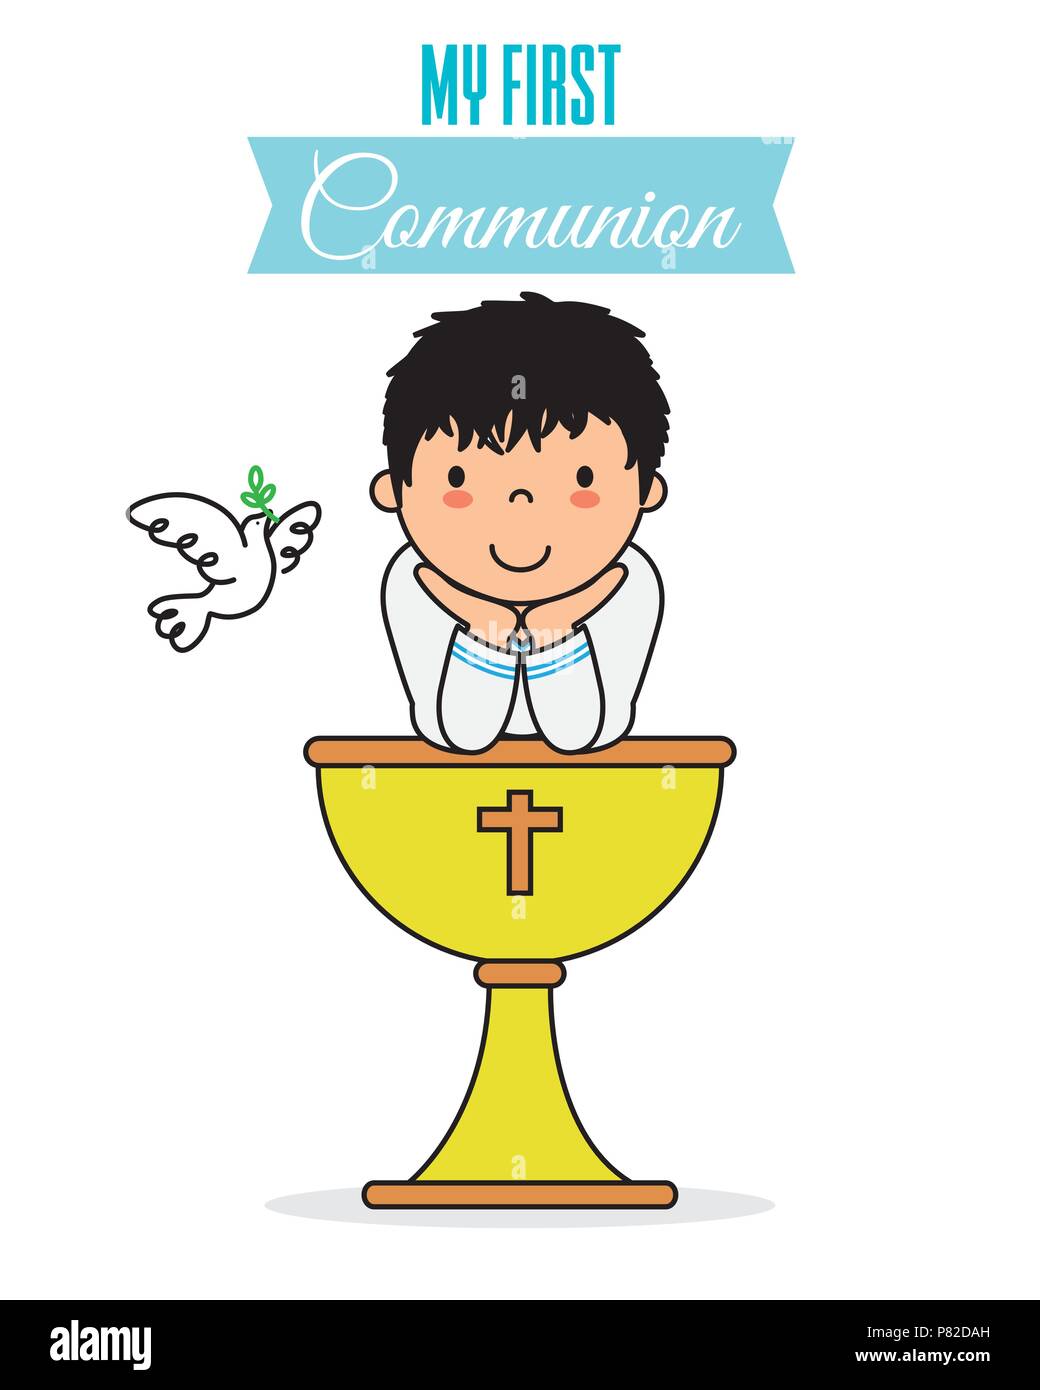 FIRST COMMUNION / Primera Comunion  First communion decorations, First  communion cards, Comunion